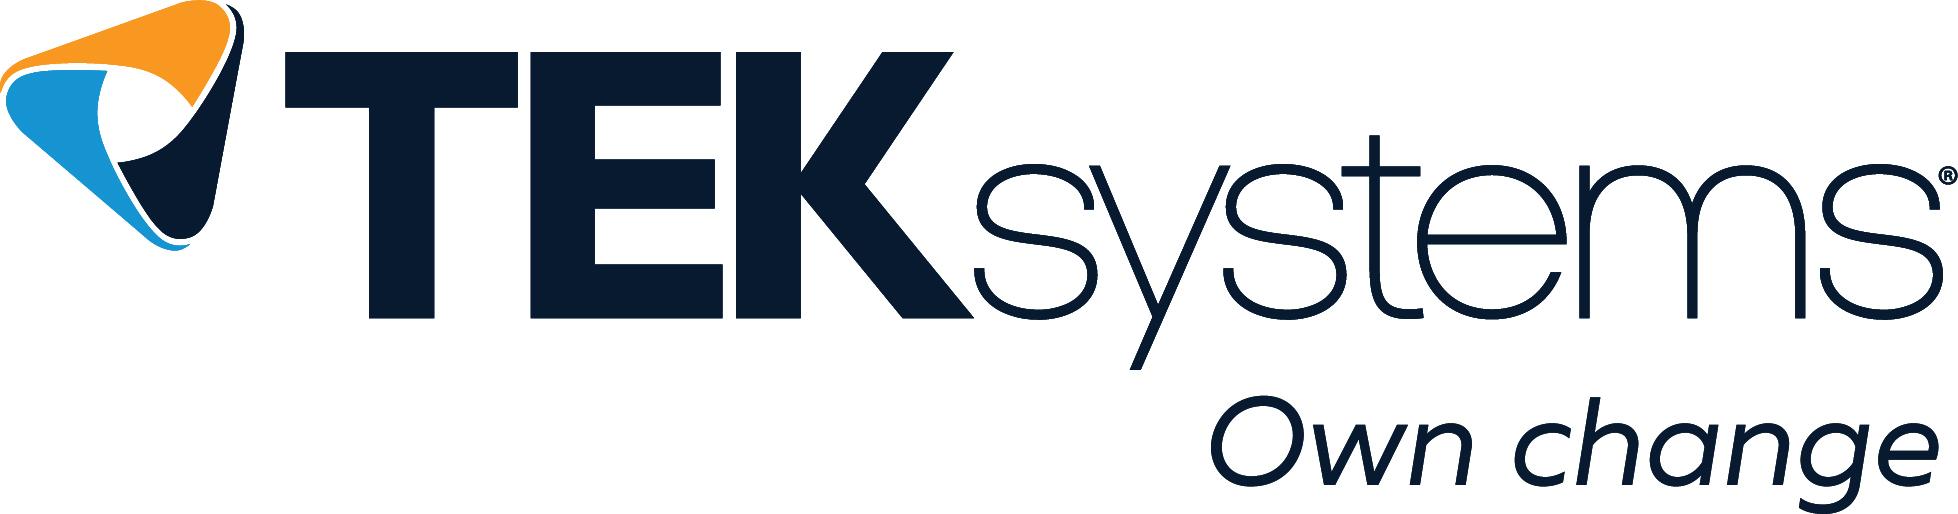 TEKsystems_logo_new_tagline_RGB-jpg.jpg